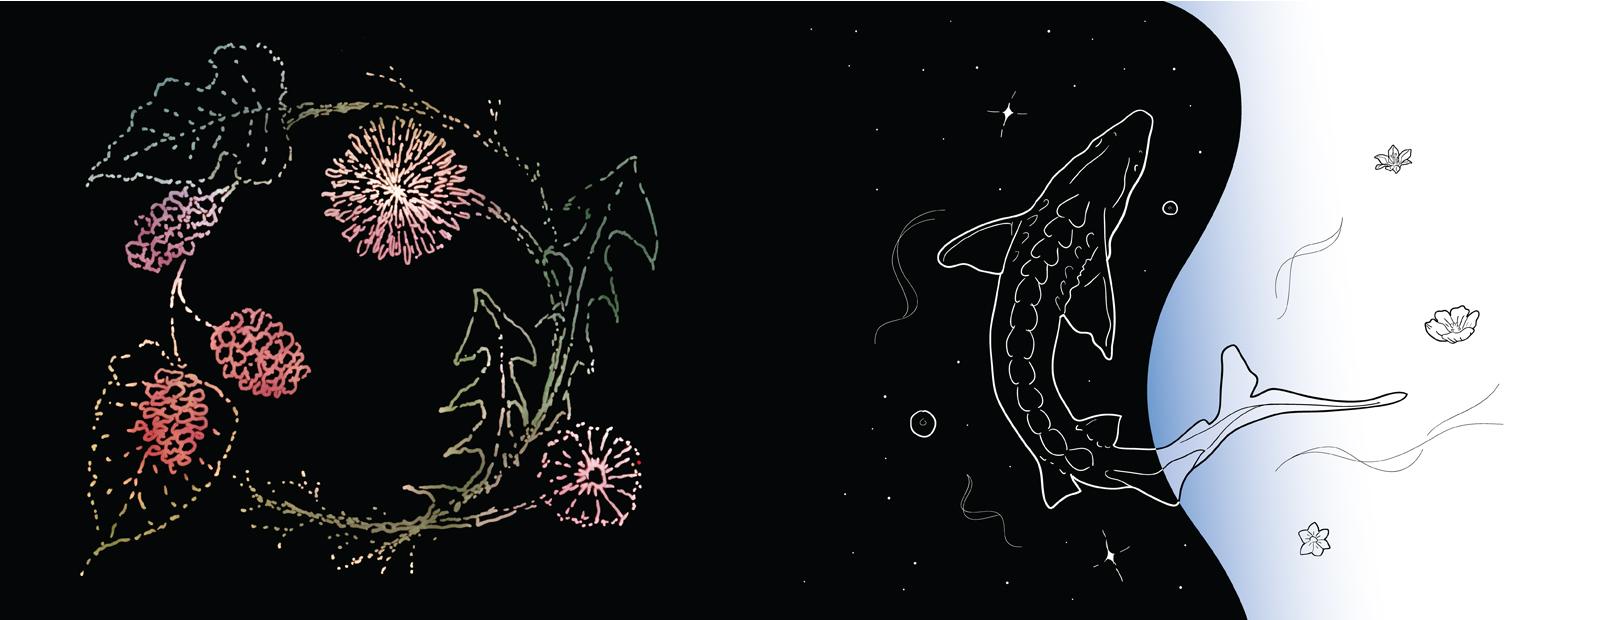 Left: Amina Lalor, mulberries & dandelions, 2020, mixed media illustration. Courtesy of artist.Right: Dani Kastelein-Longlade, Relations, 2022, digital illustration. Courtesy of artists. 